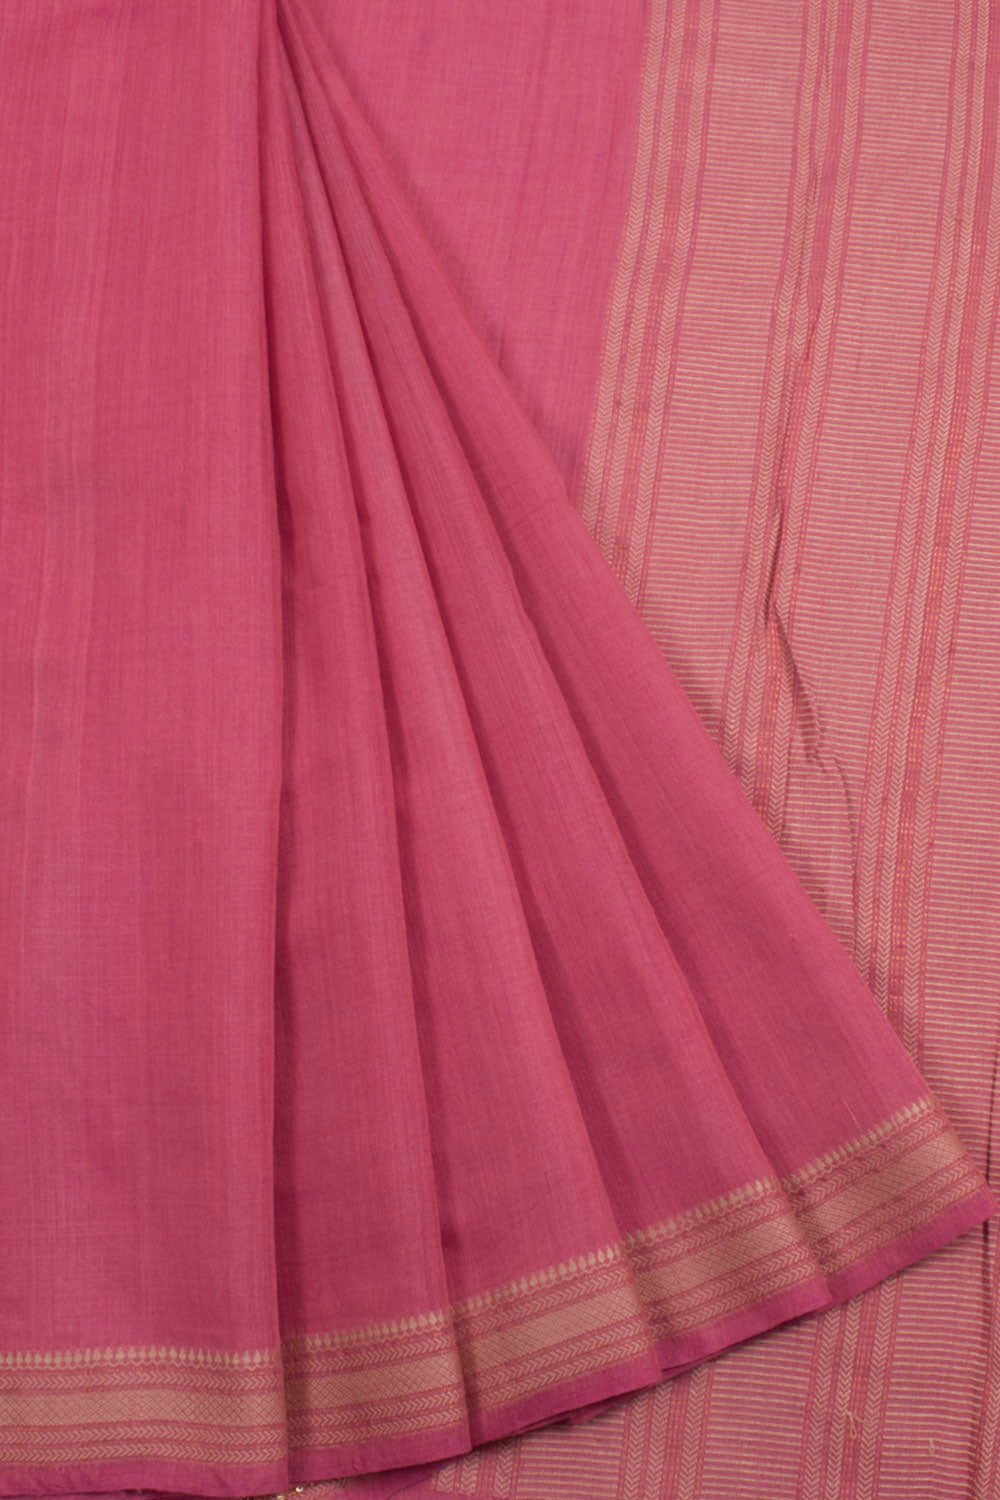 Handloom Tussar Silk Saree with Heavy Sequin, Zari Embroidery